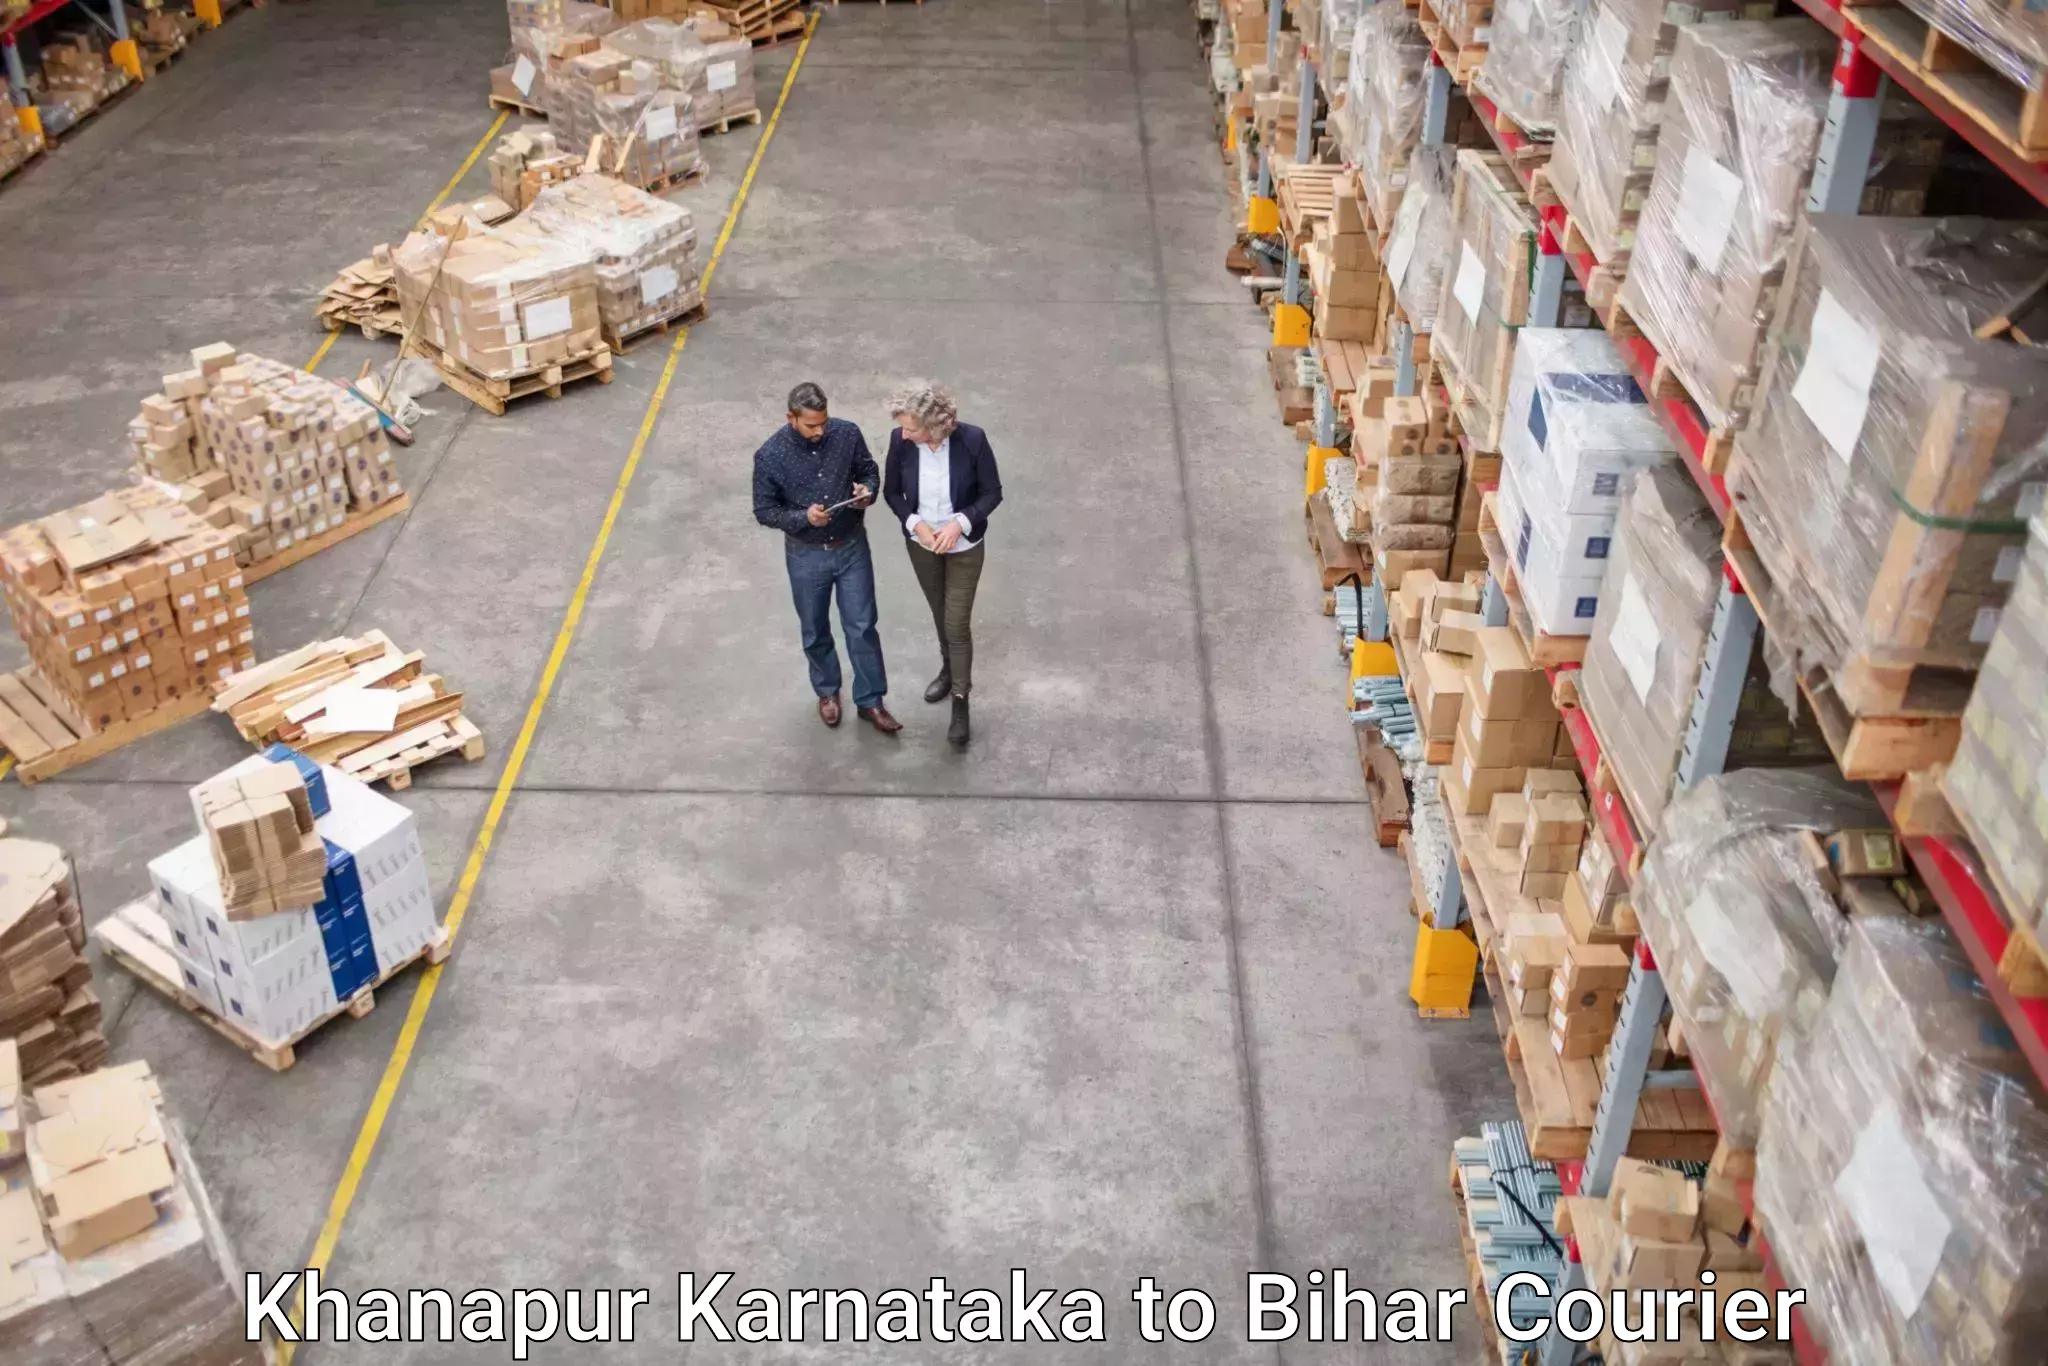 Nationwide delivery network Khanapur Karnataka to Barbigha